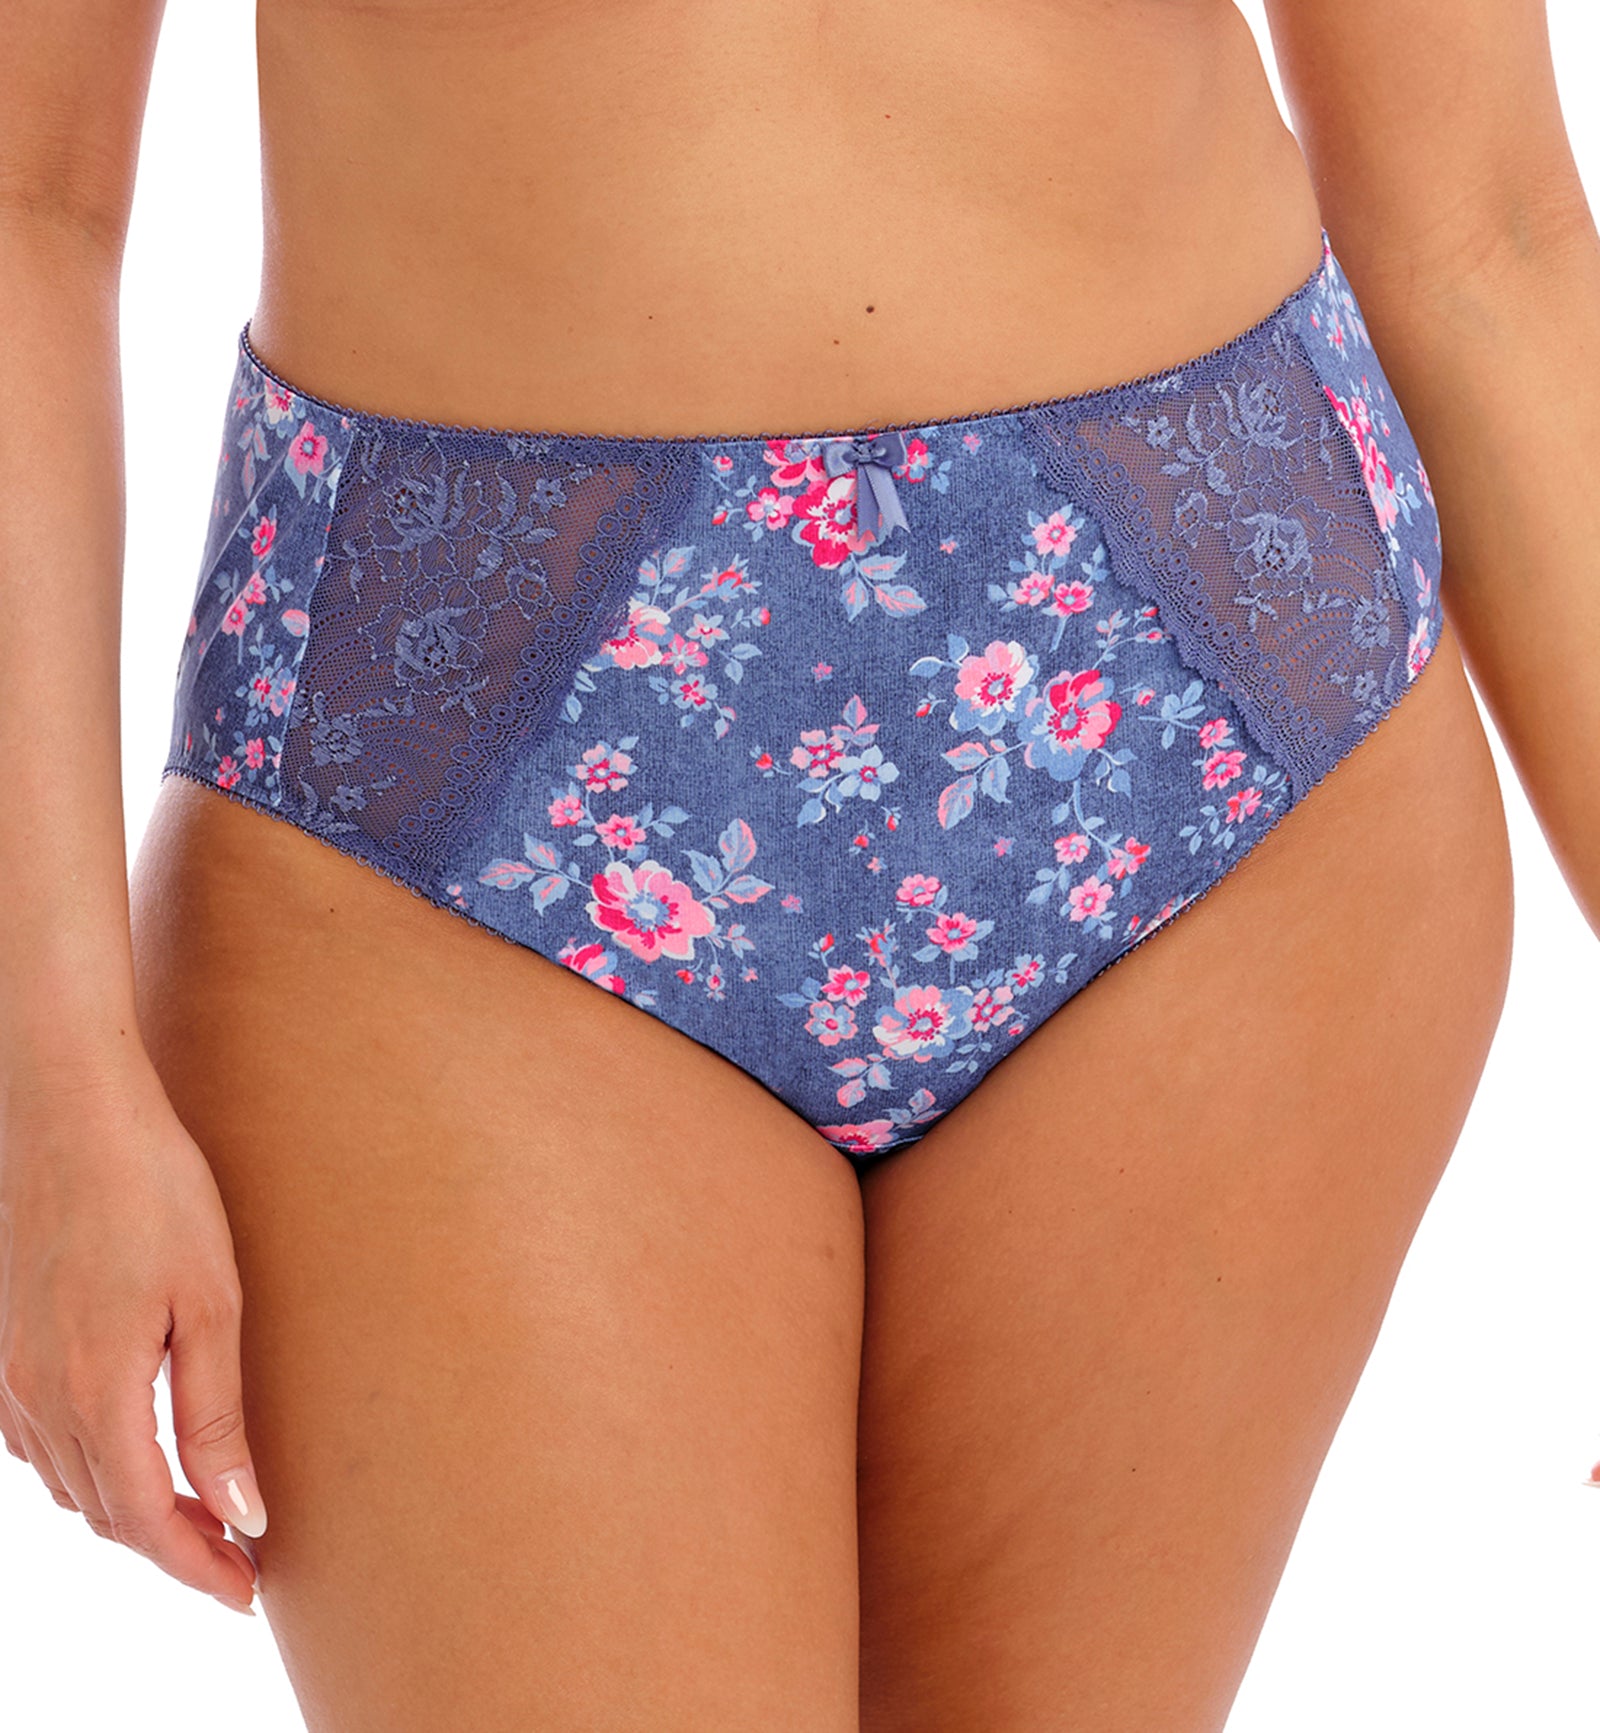 Elomi Morgan Stretch Lace Full Brief Panty (4116),Medium,Denim Floral - Denim Floral,Medium